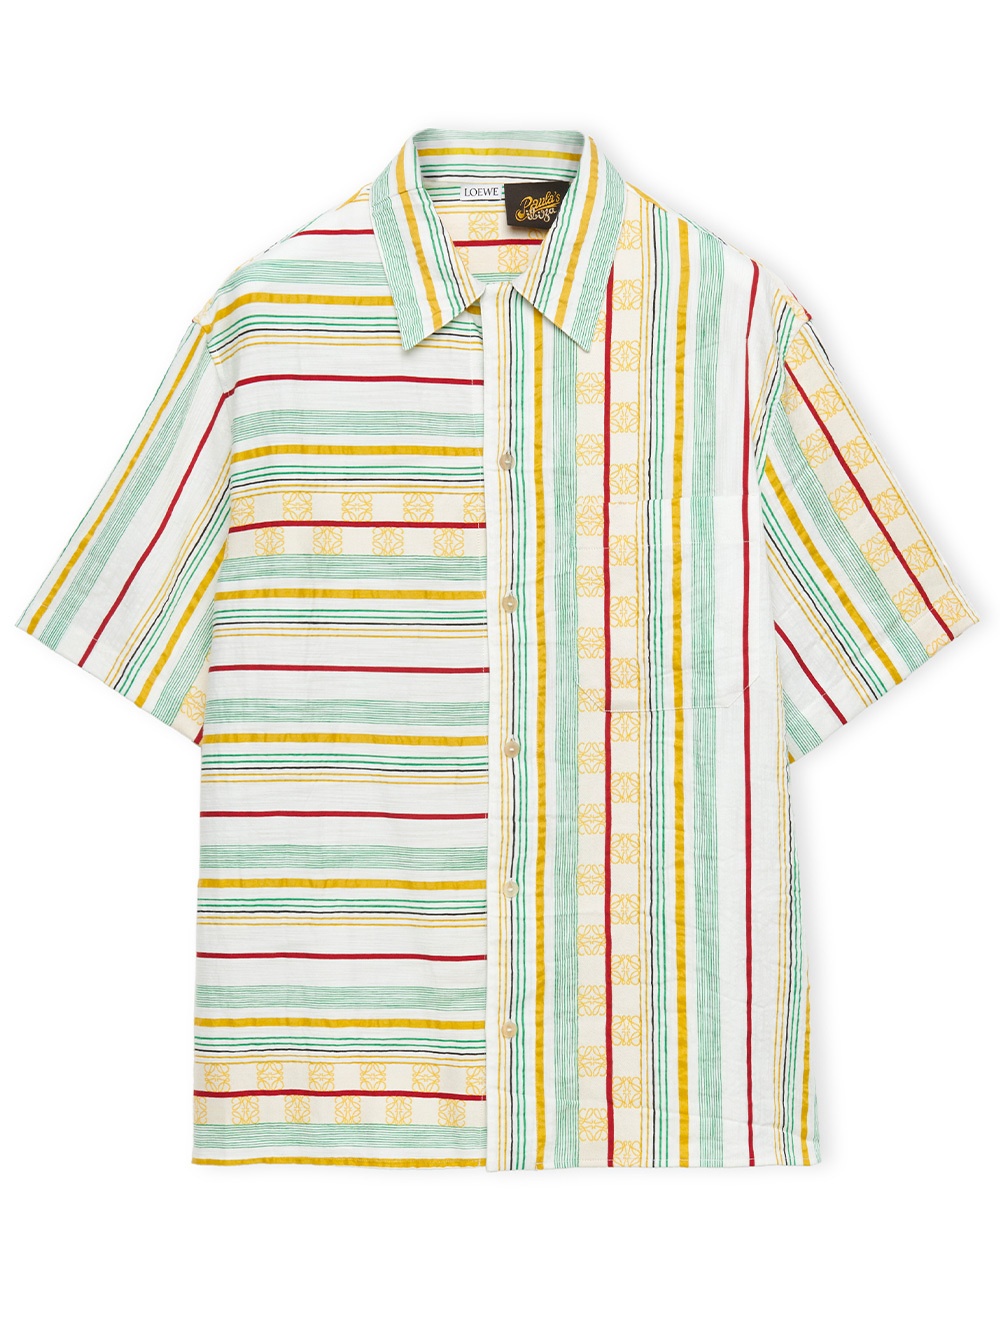 LOEWE PAULA'S IBIZA - Short Sleeve Striped Shirt